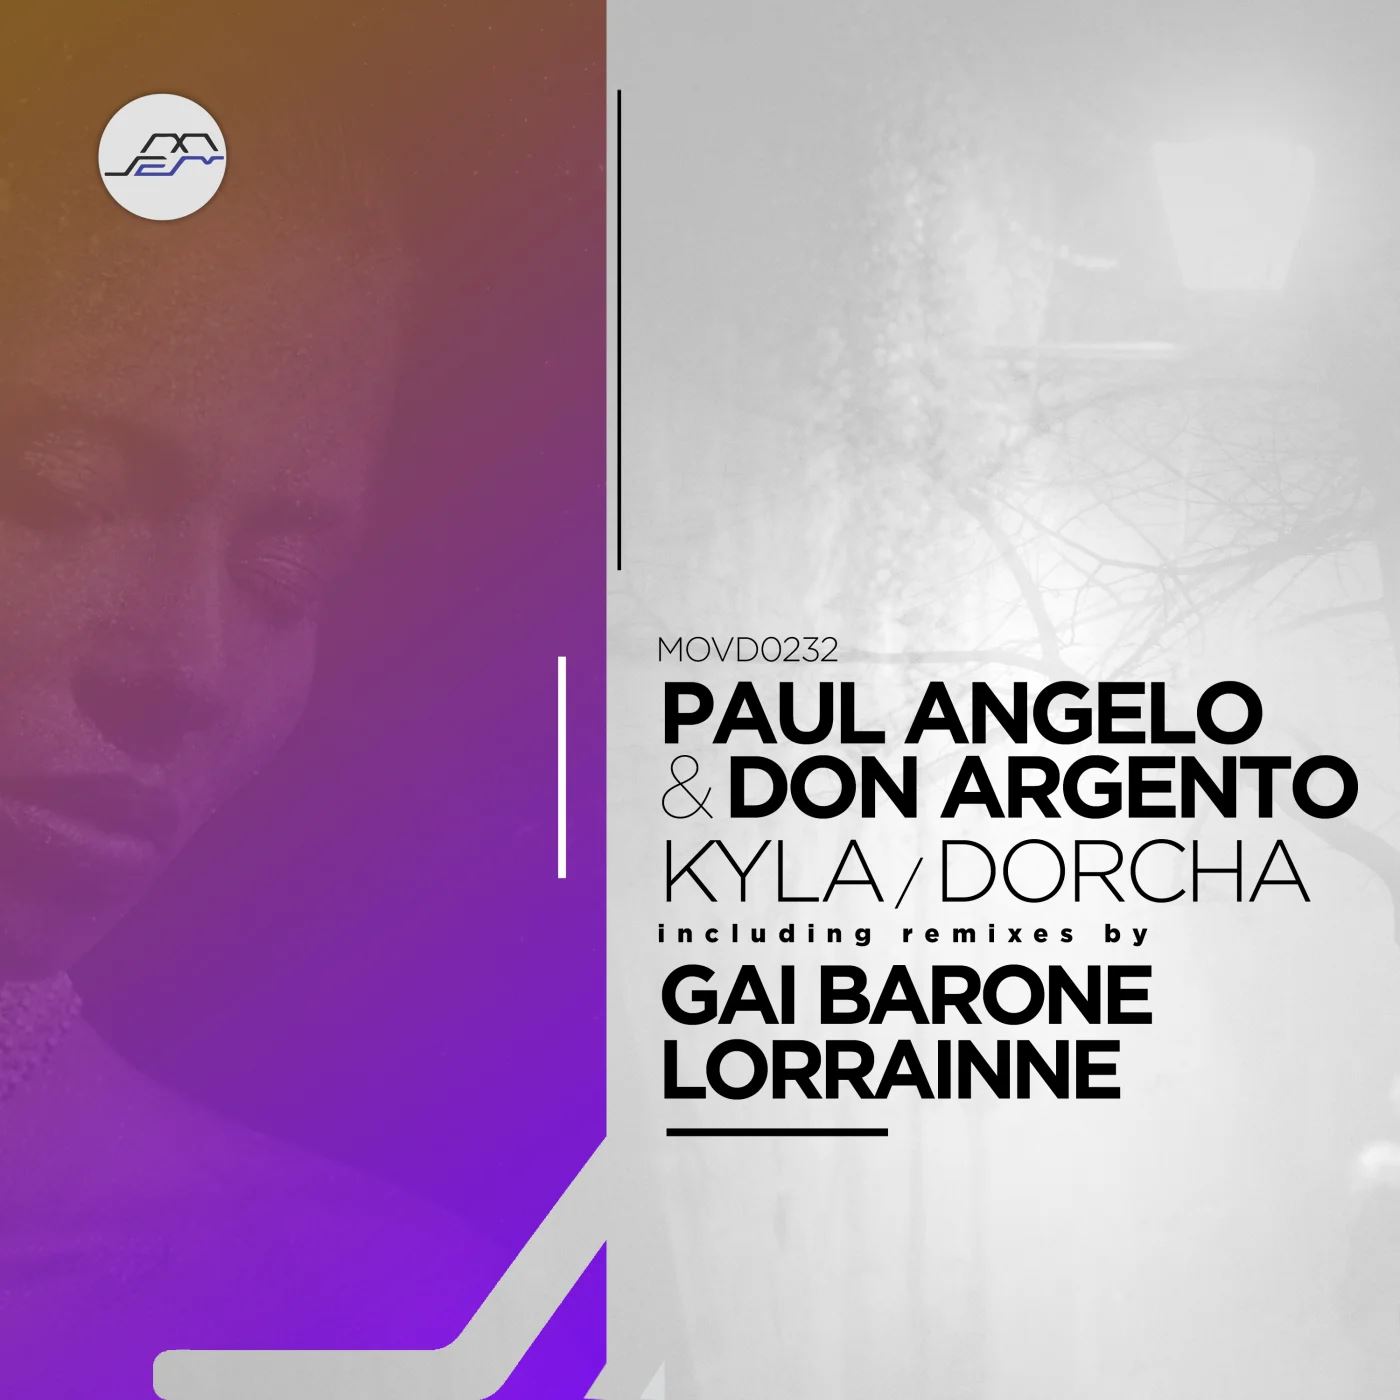 Paul Angelo & Don Argento - Kyla [MOVD0232]